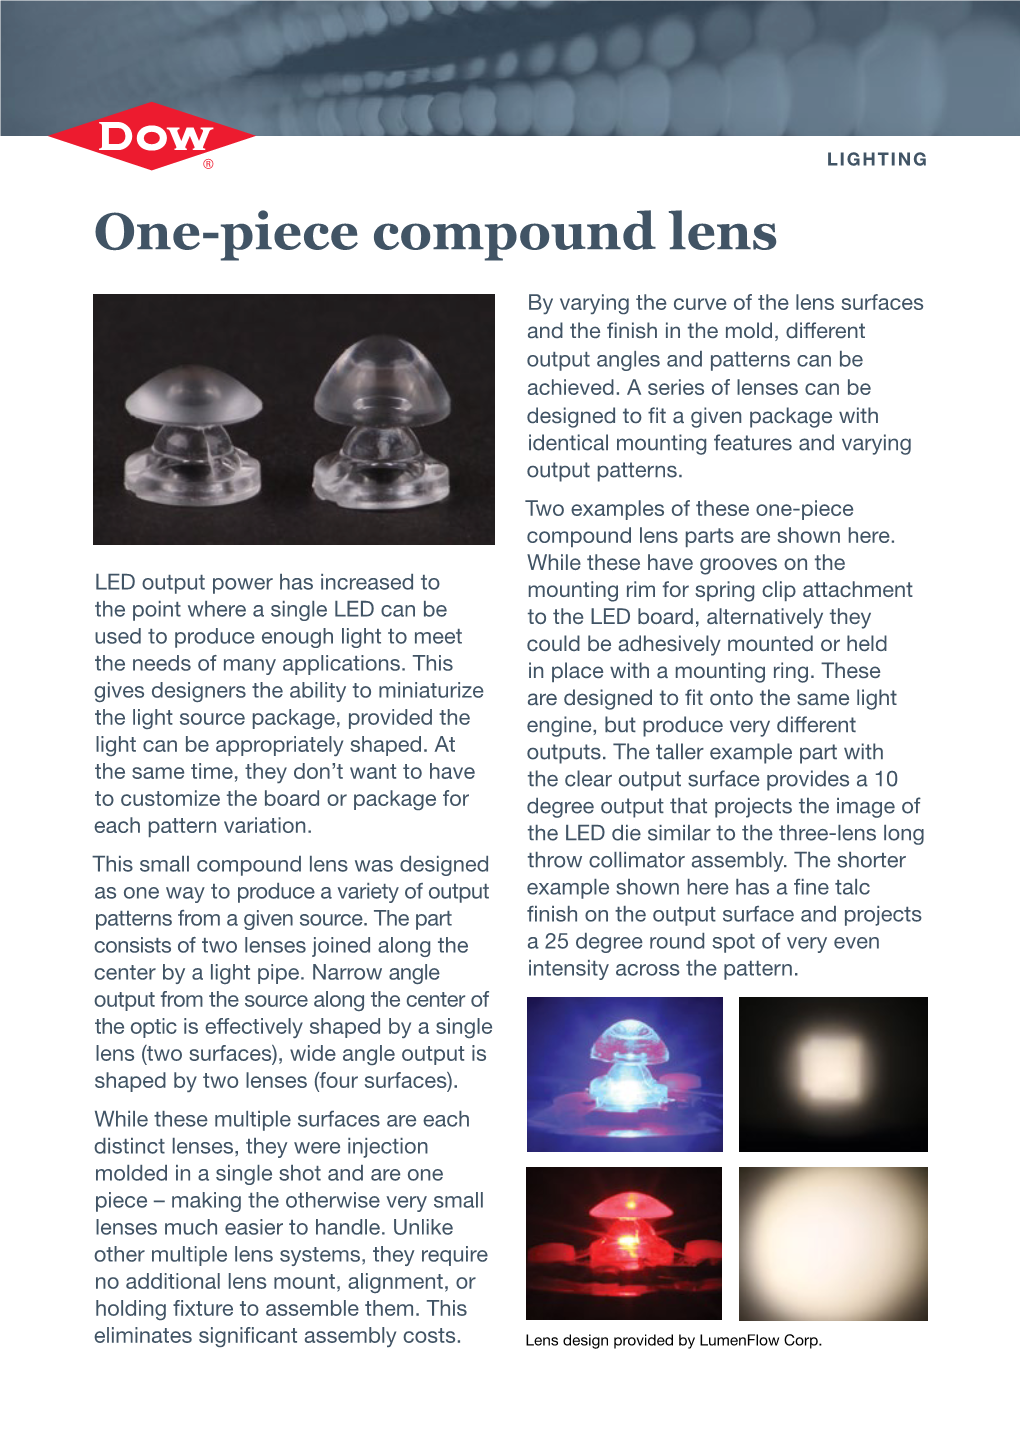 One-Piece Compound Lens